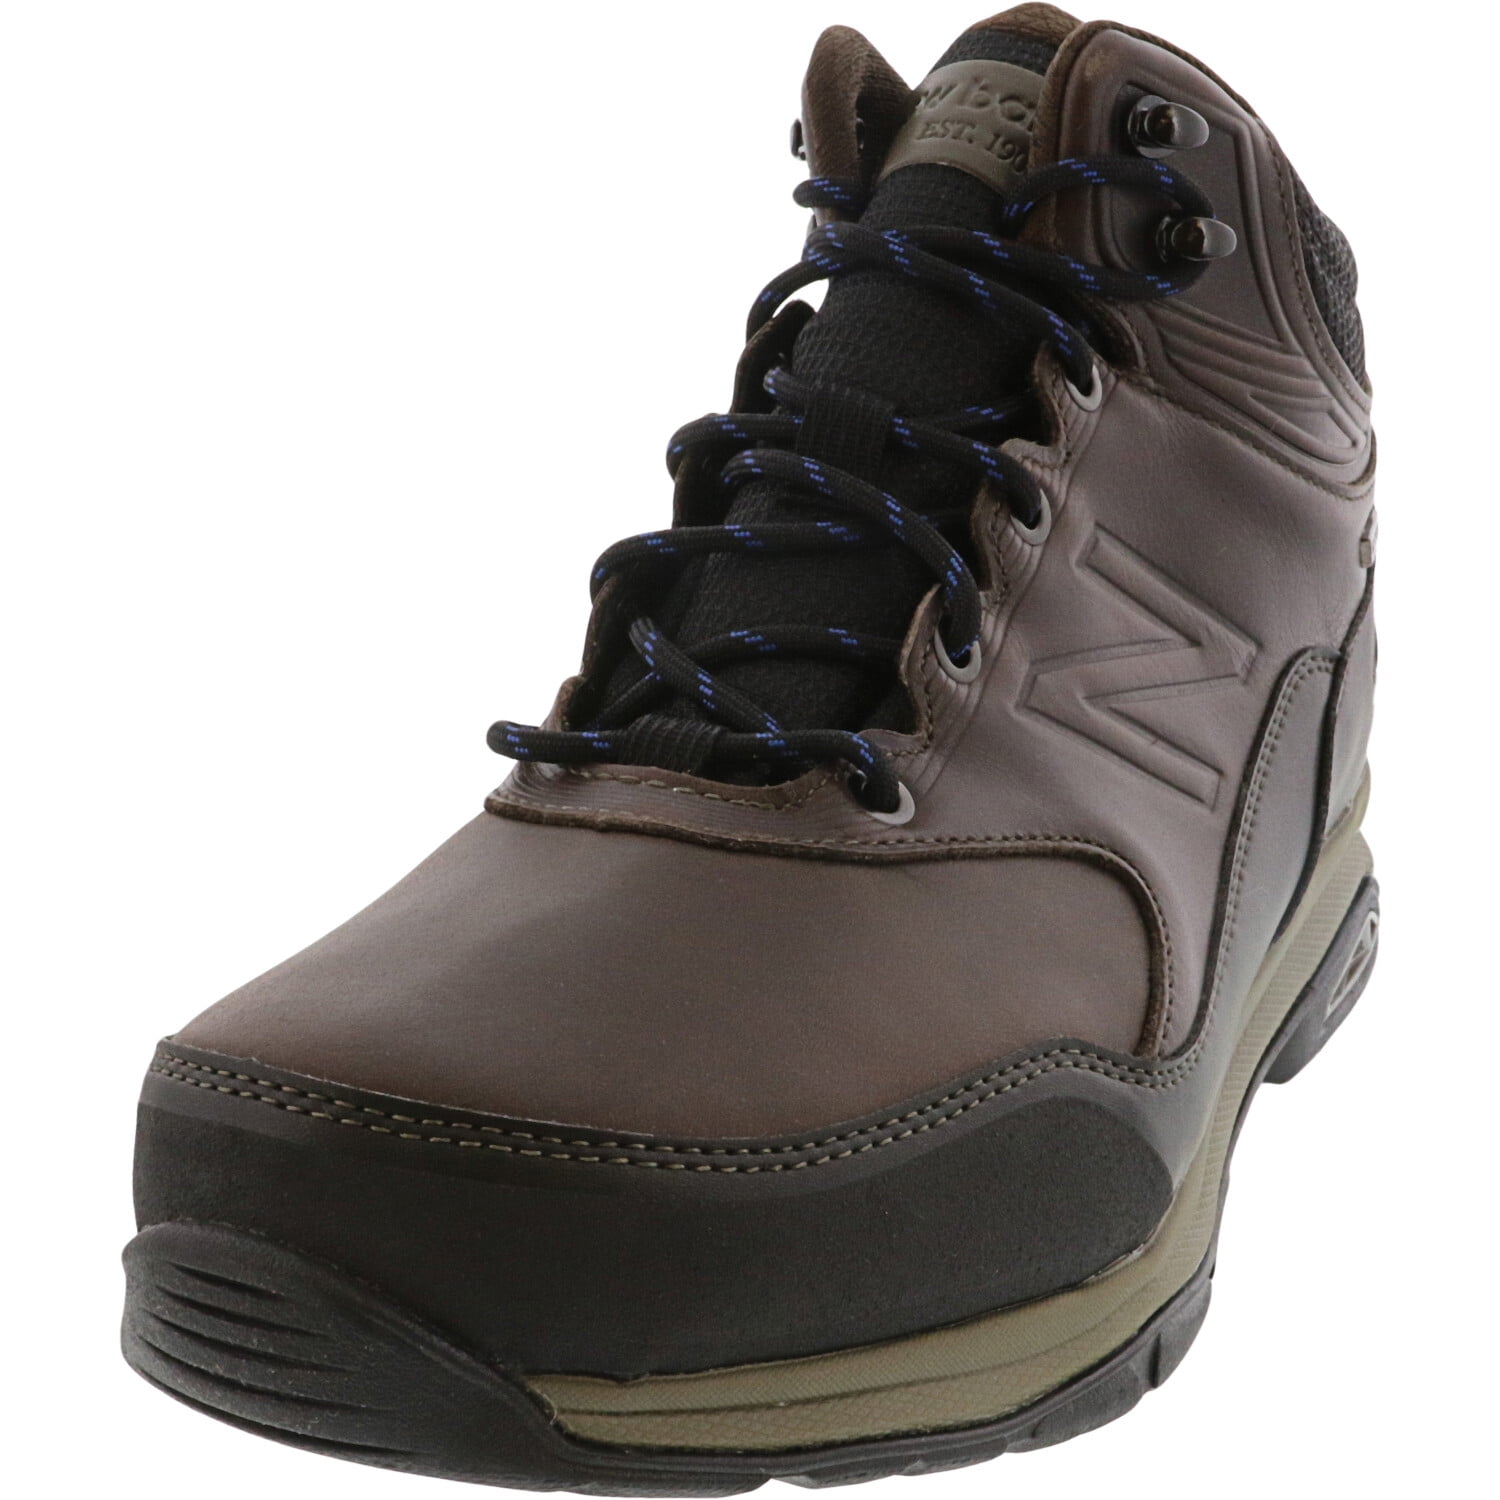 New Balance Men's Mw1400 Db High-Top Leather Hiking Shoe - 10.5N ...